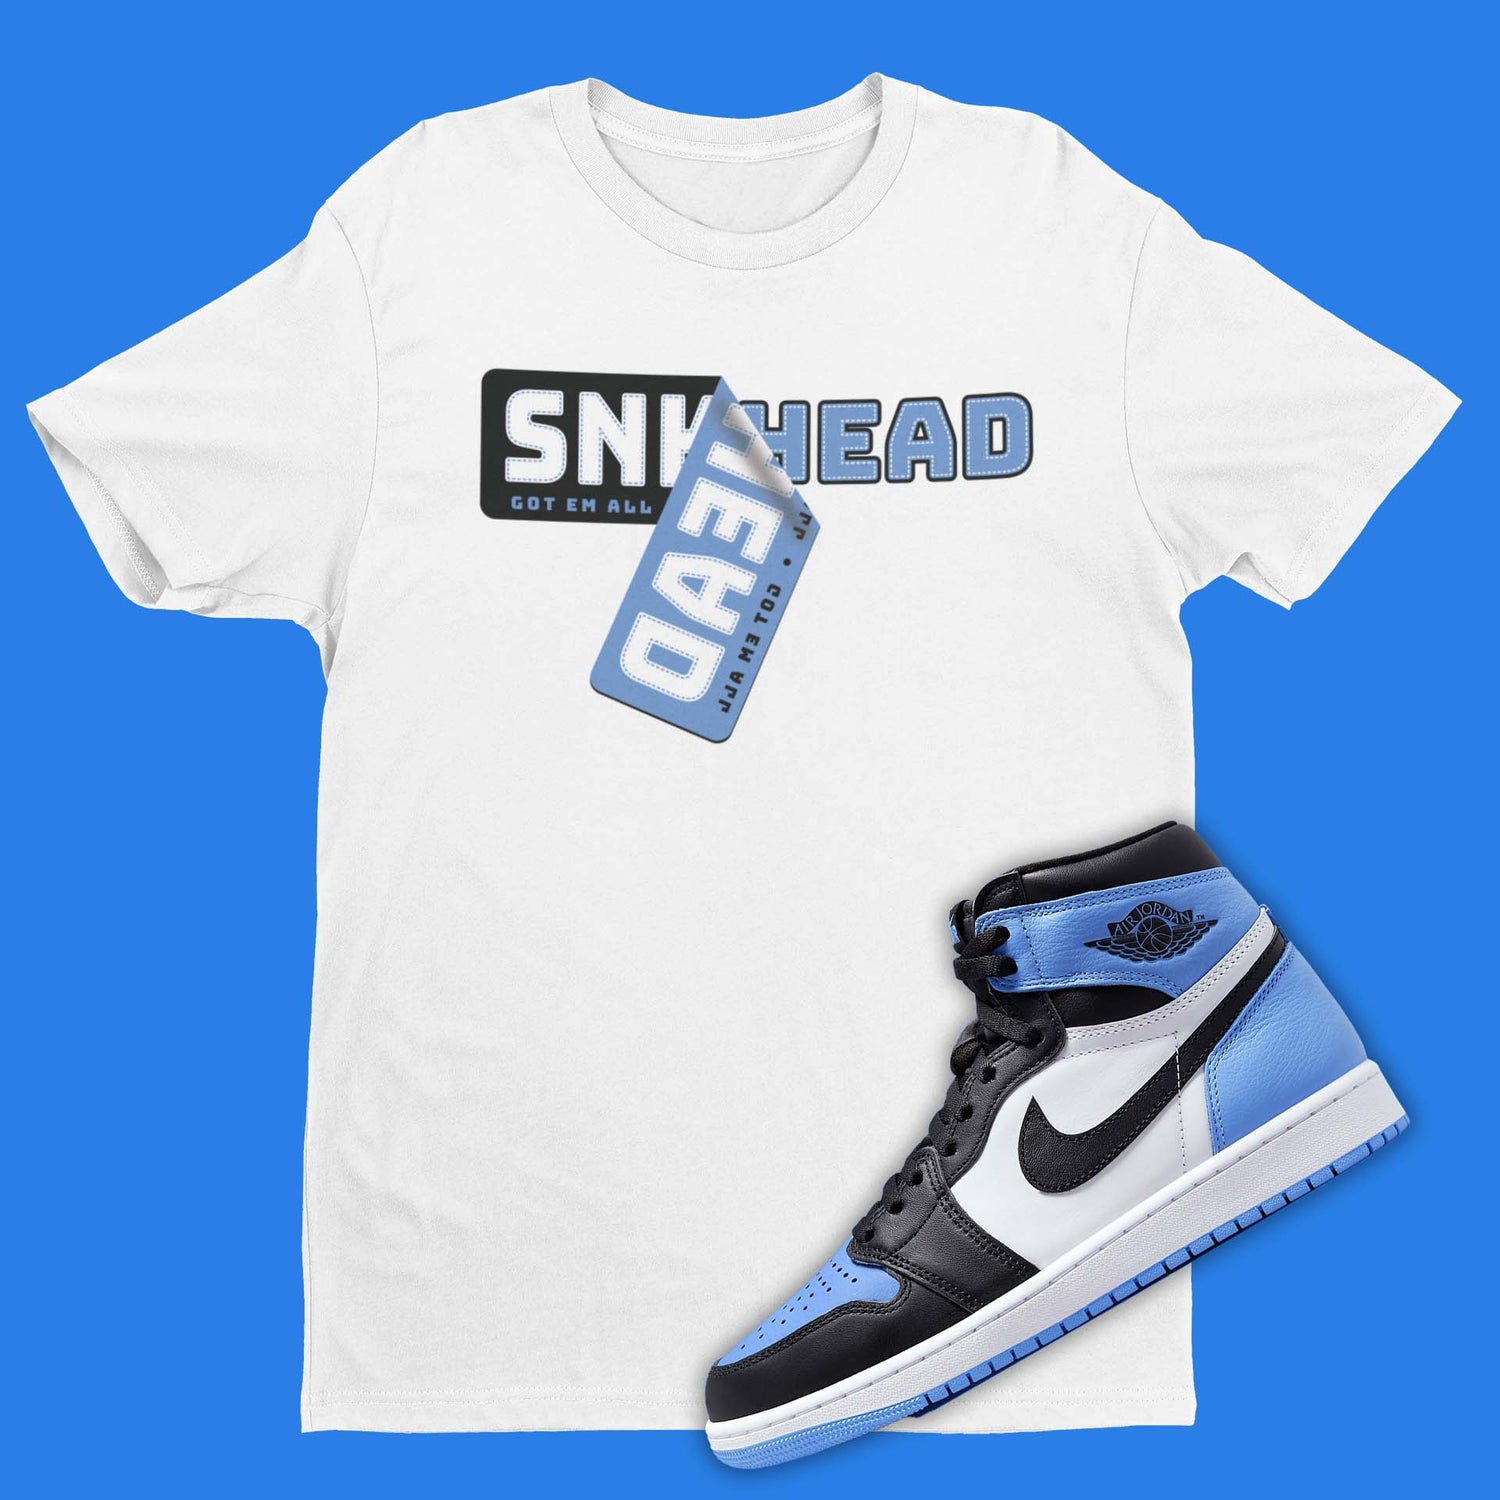 Air Jordan 1 Retro High OG UNC Toe inspired shirt with sneaker sticker shirt on the front